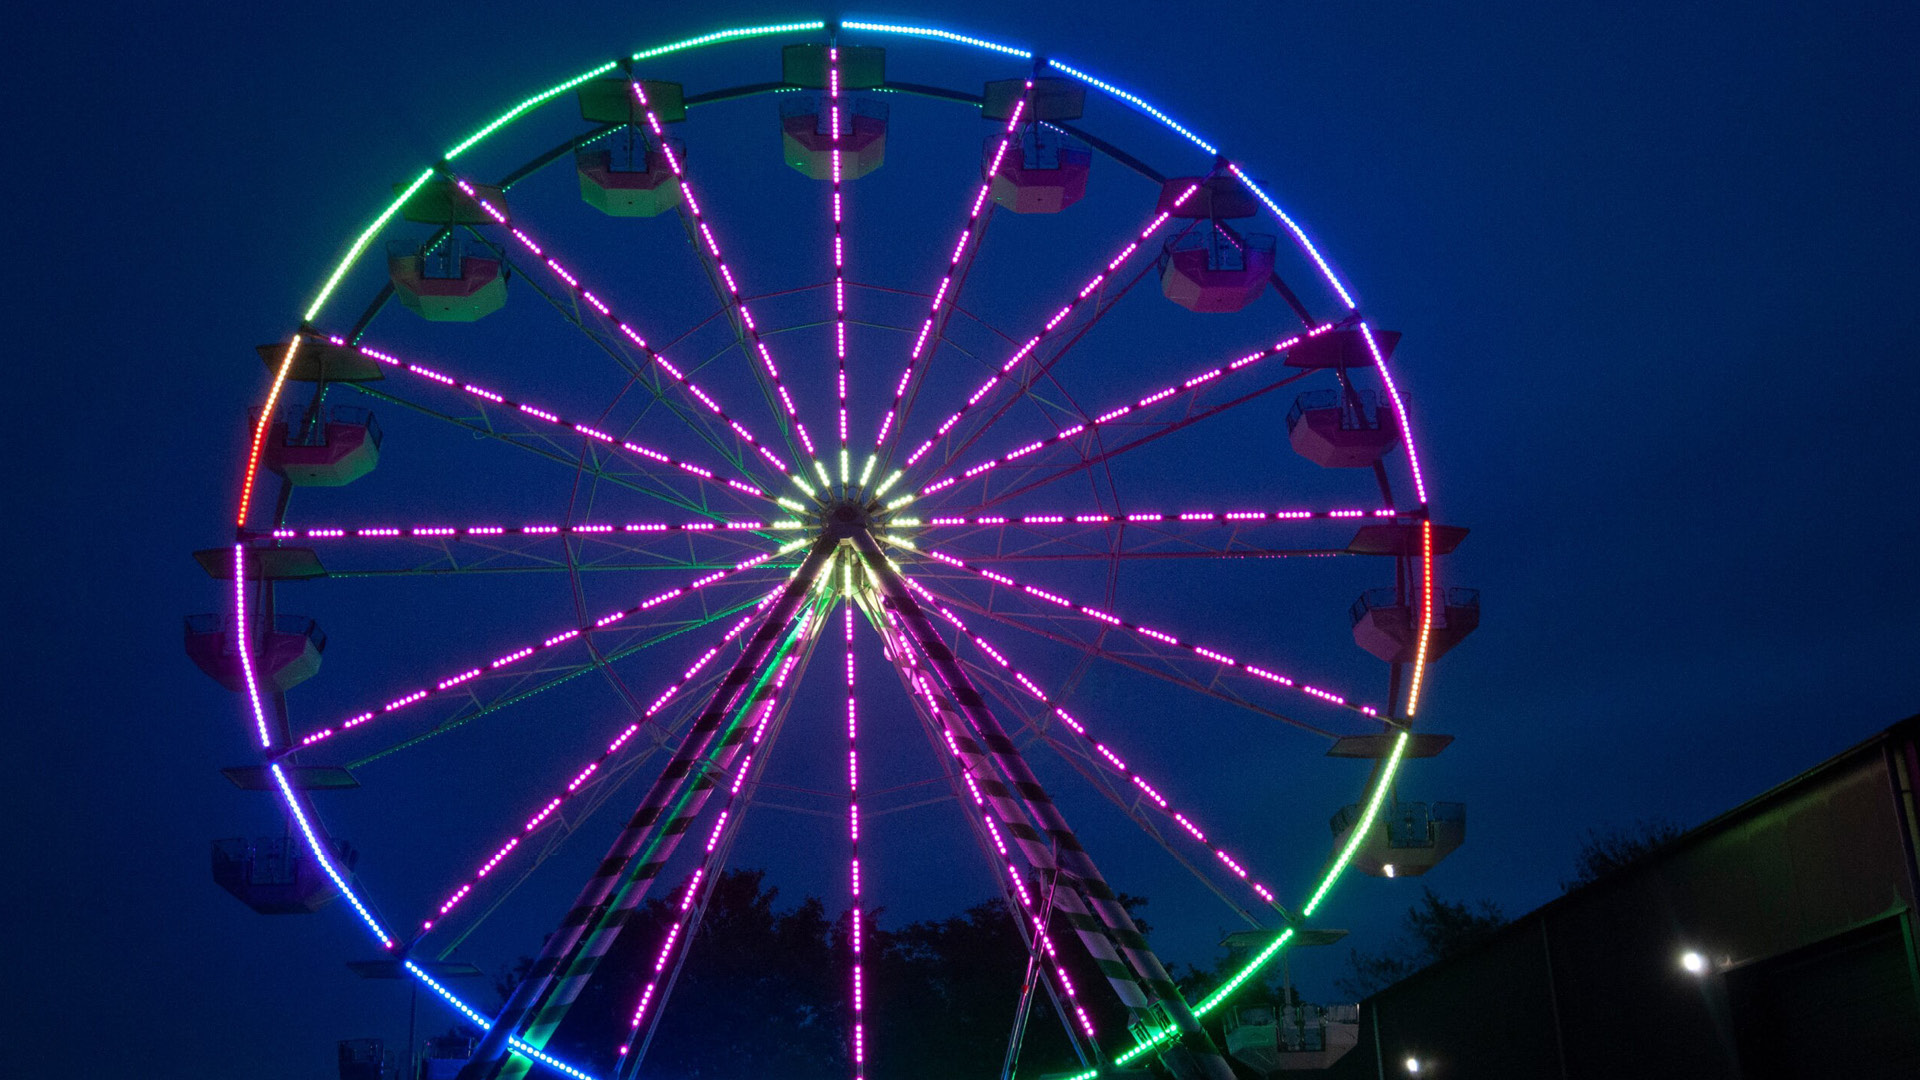 The Ferris wheel illuminated at night.